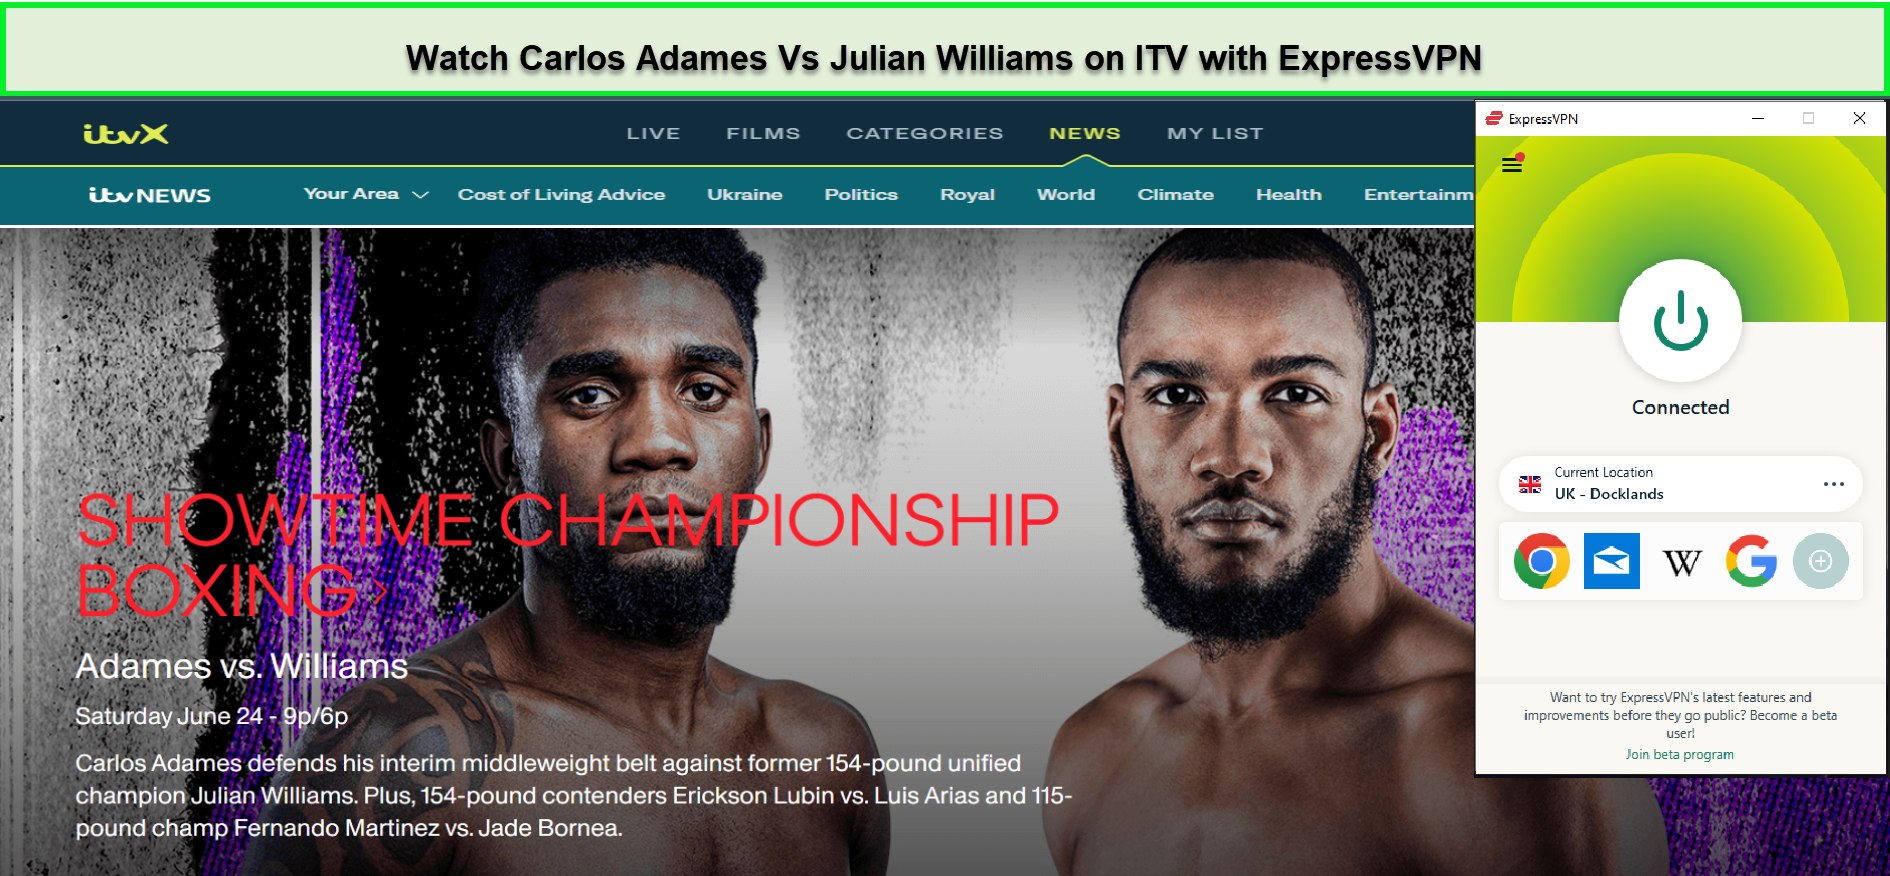 Watch-Carlos-Adames-Vs-Julian-Williams-in-UAE-on-ITV-with-ExpressVPN